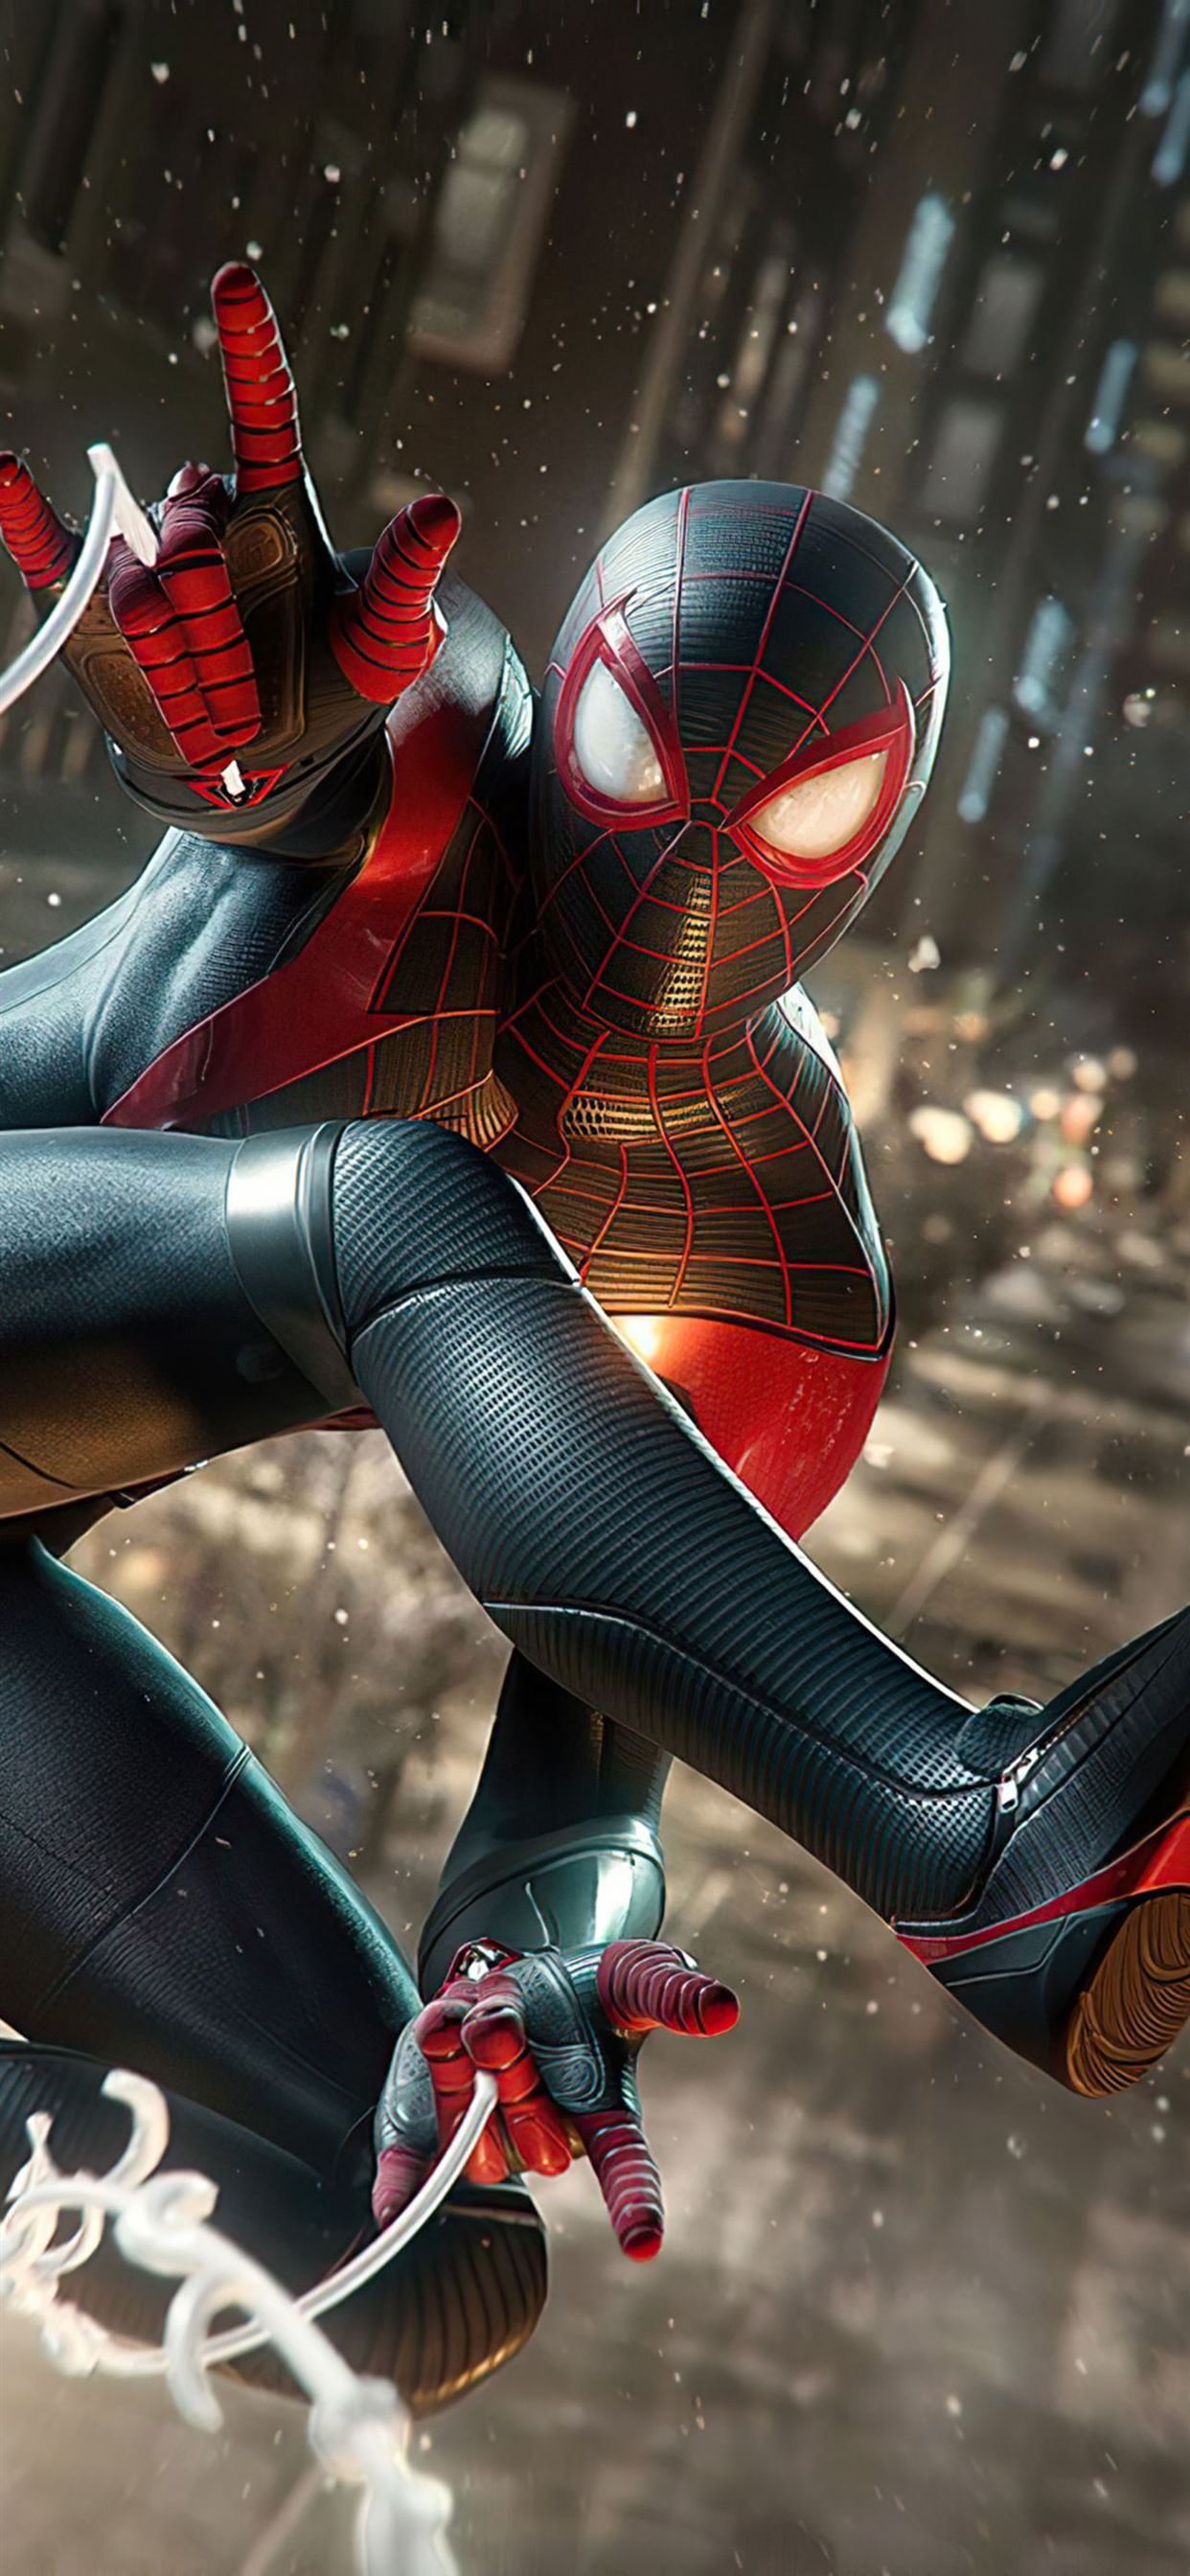 marvels spiderman miles morales 4k 2020 iPhone 11 Wallpaper Free Download